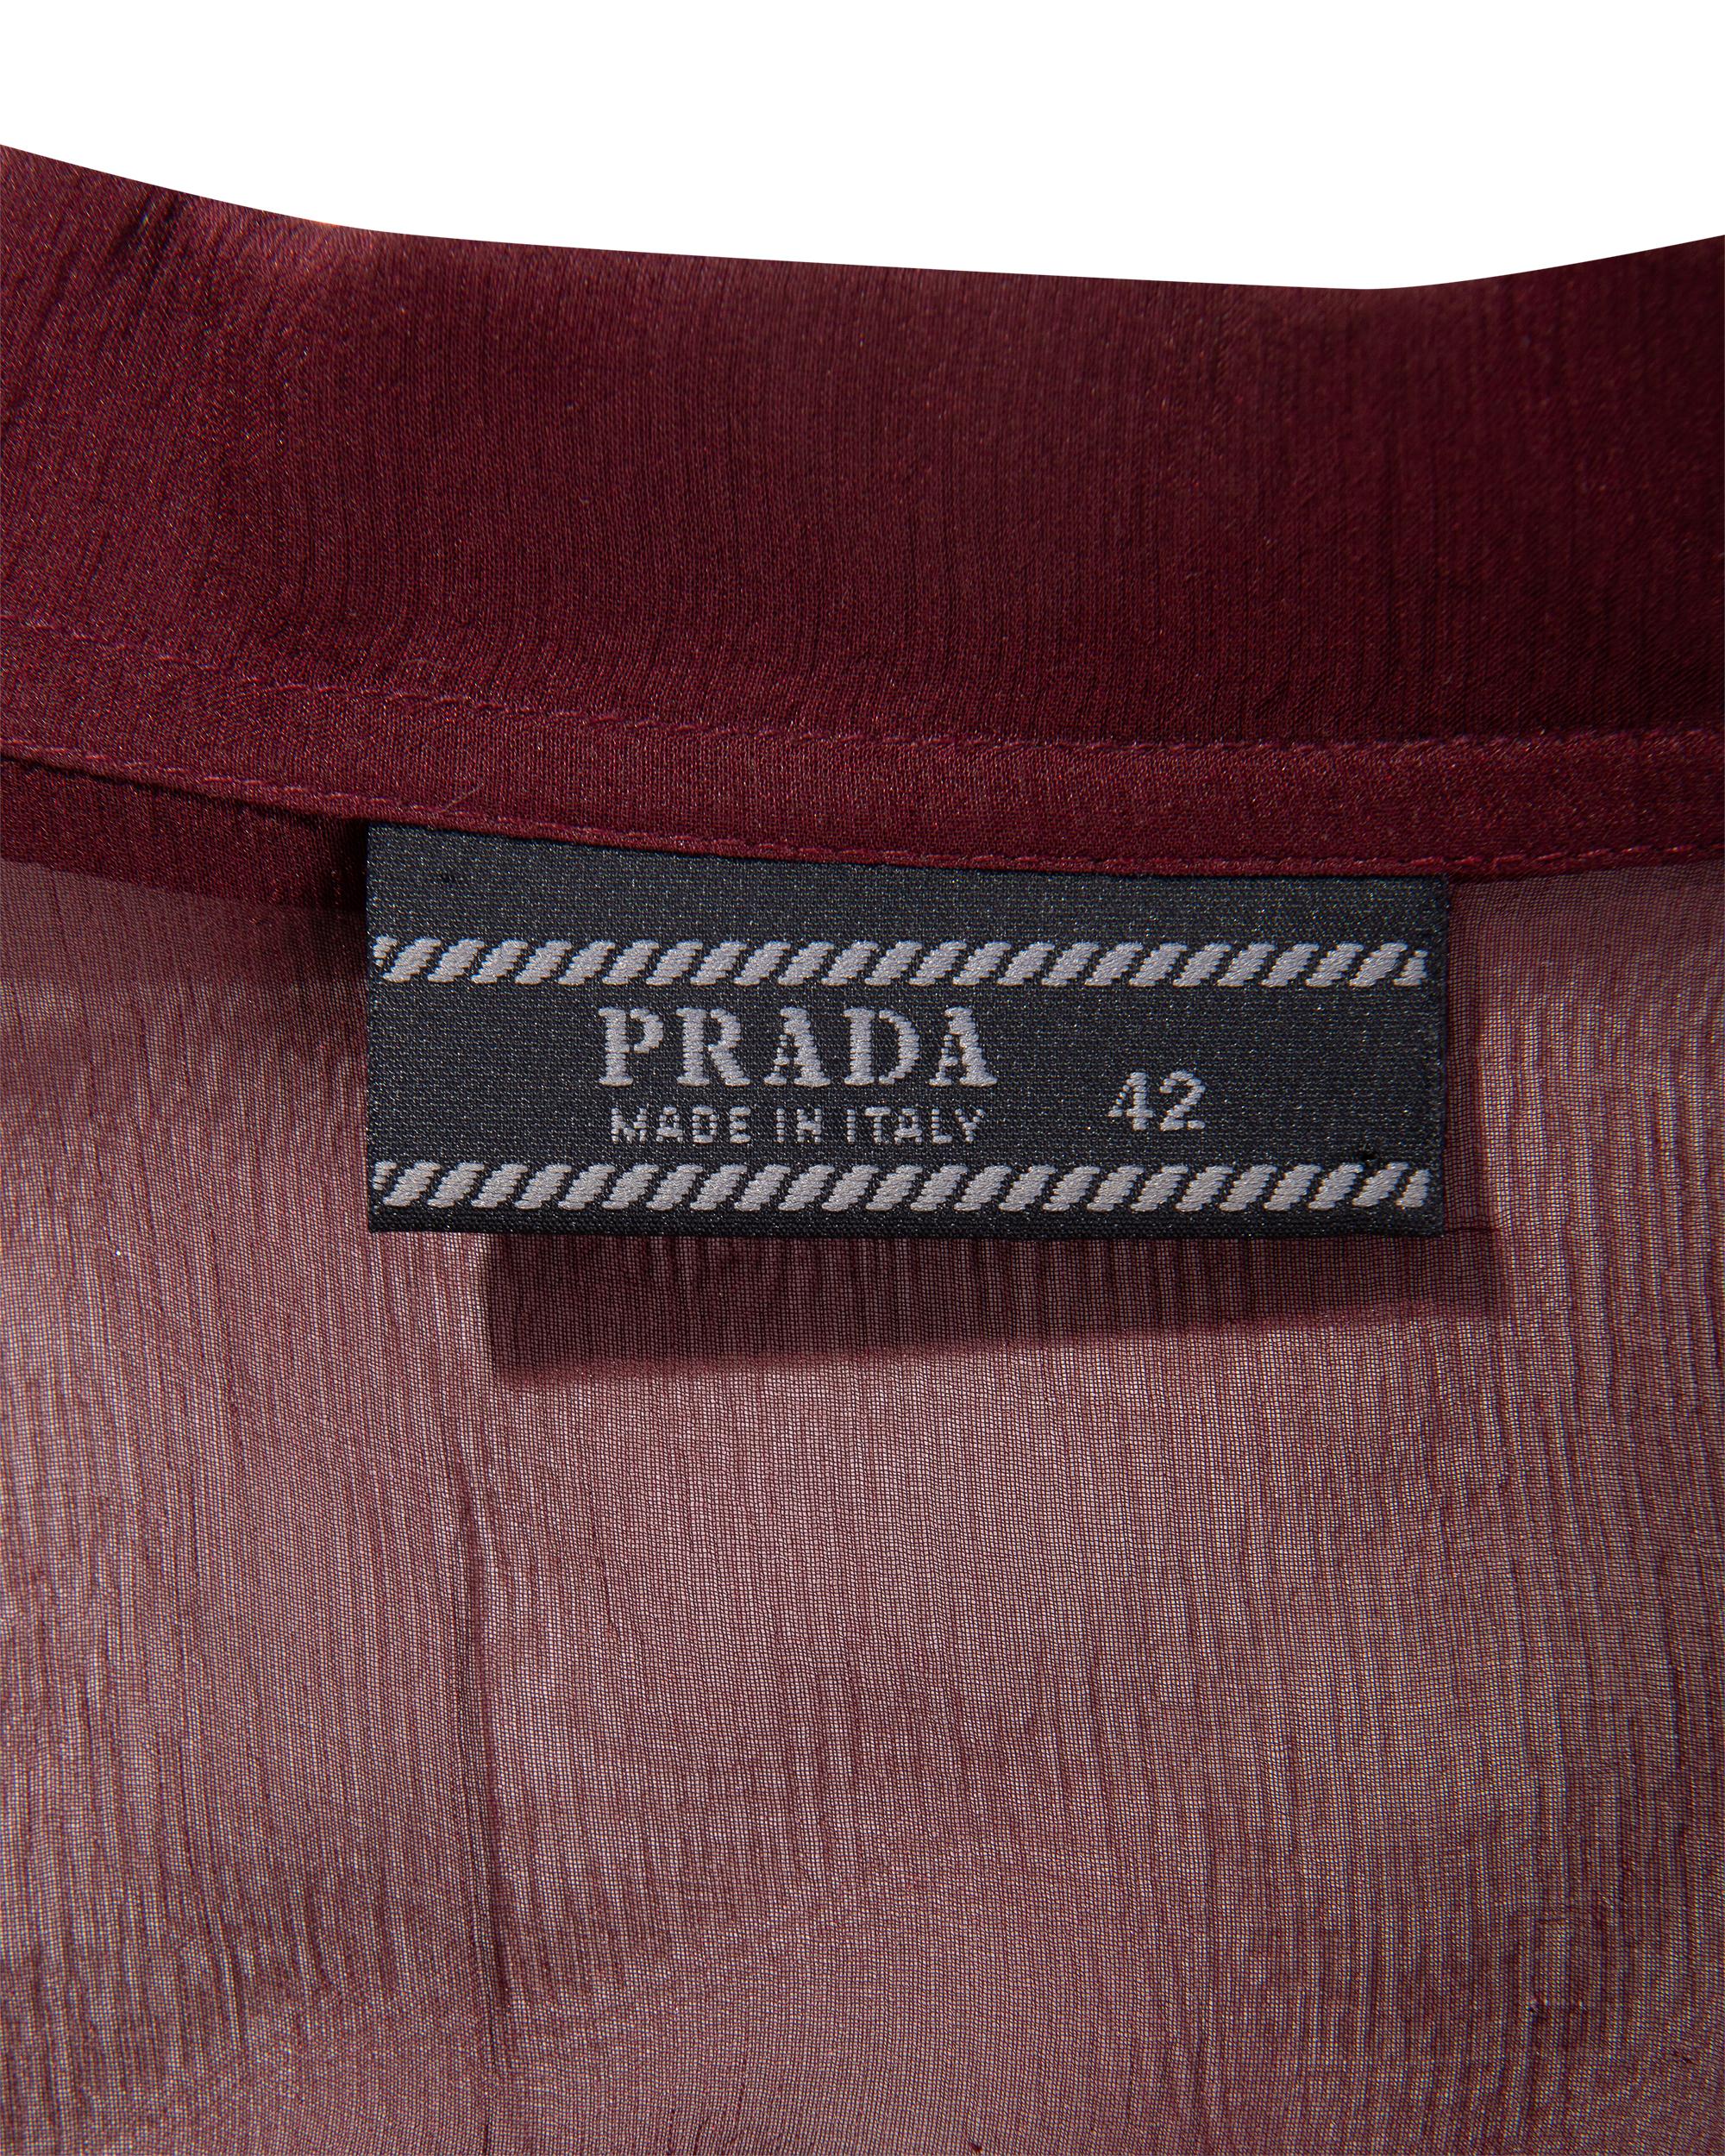 S/S 1997 Prada by Miuccia Prada Merlot Silk Chiffon Skirt Set 12